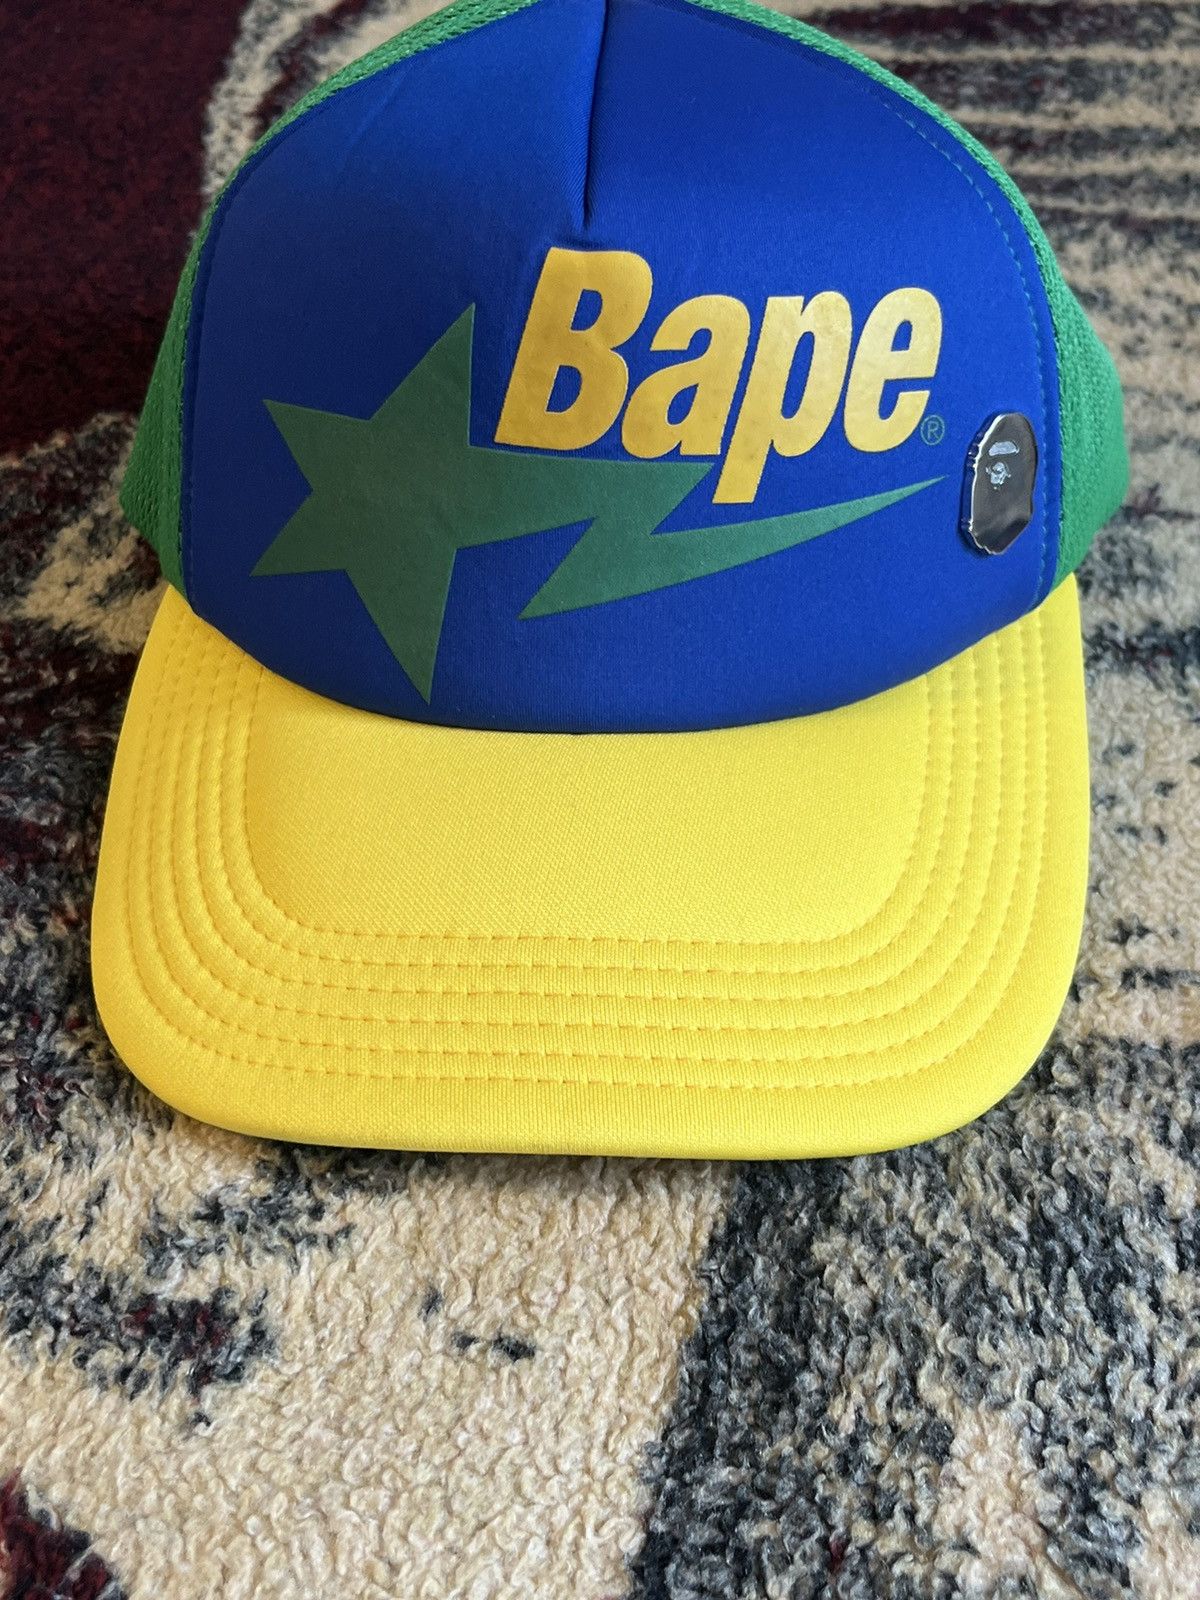 BAPE Sta Mesh Cap Yellow Green Blue